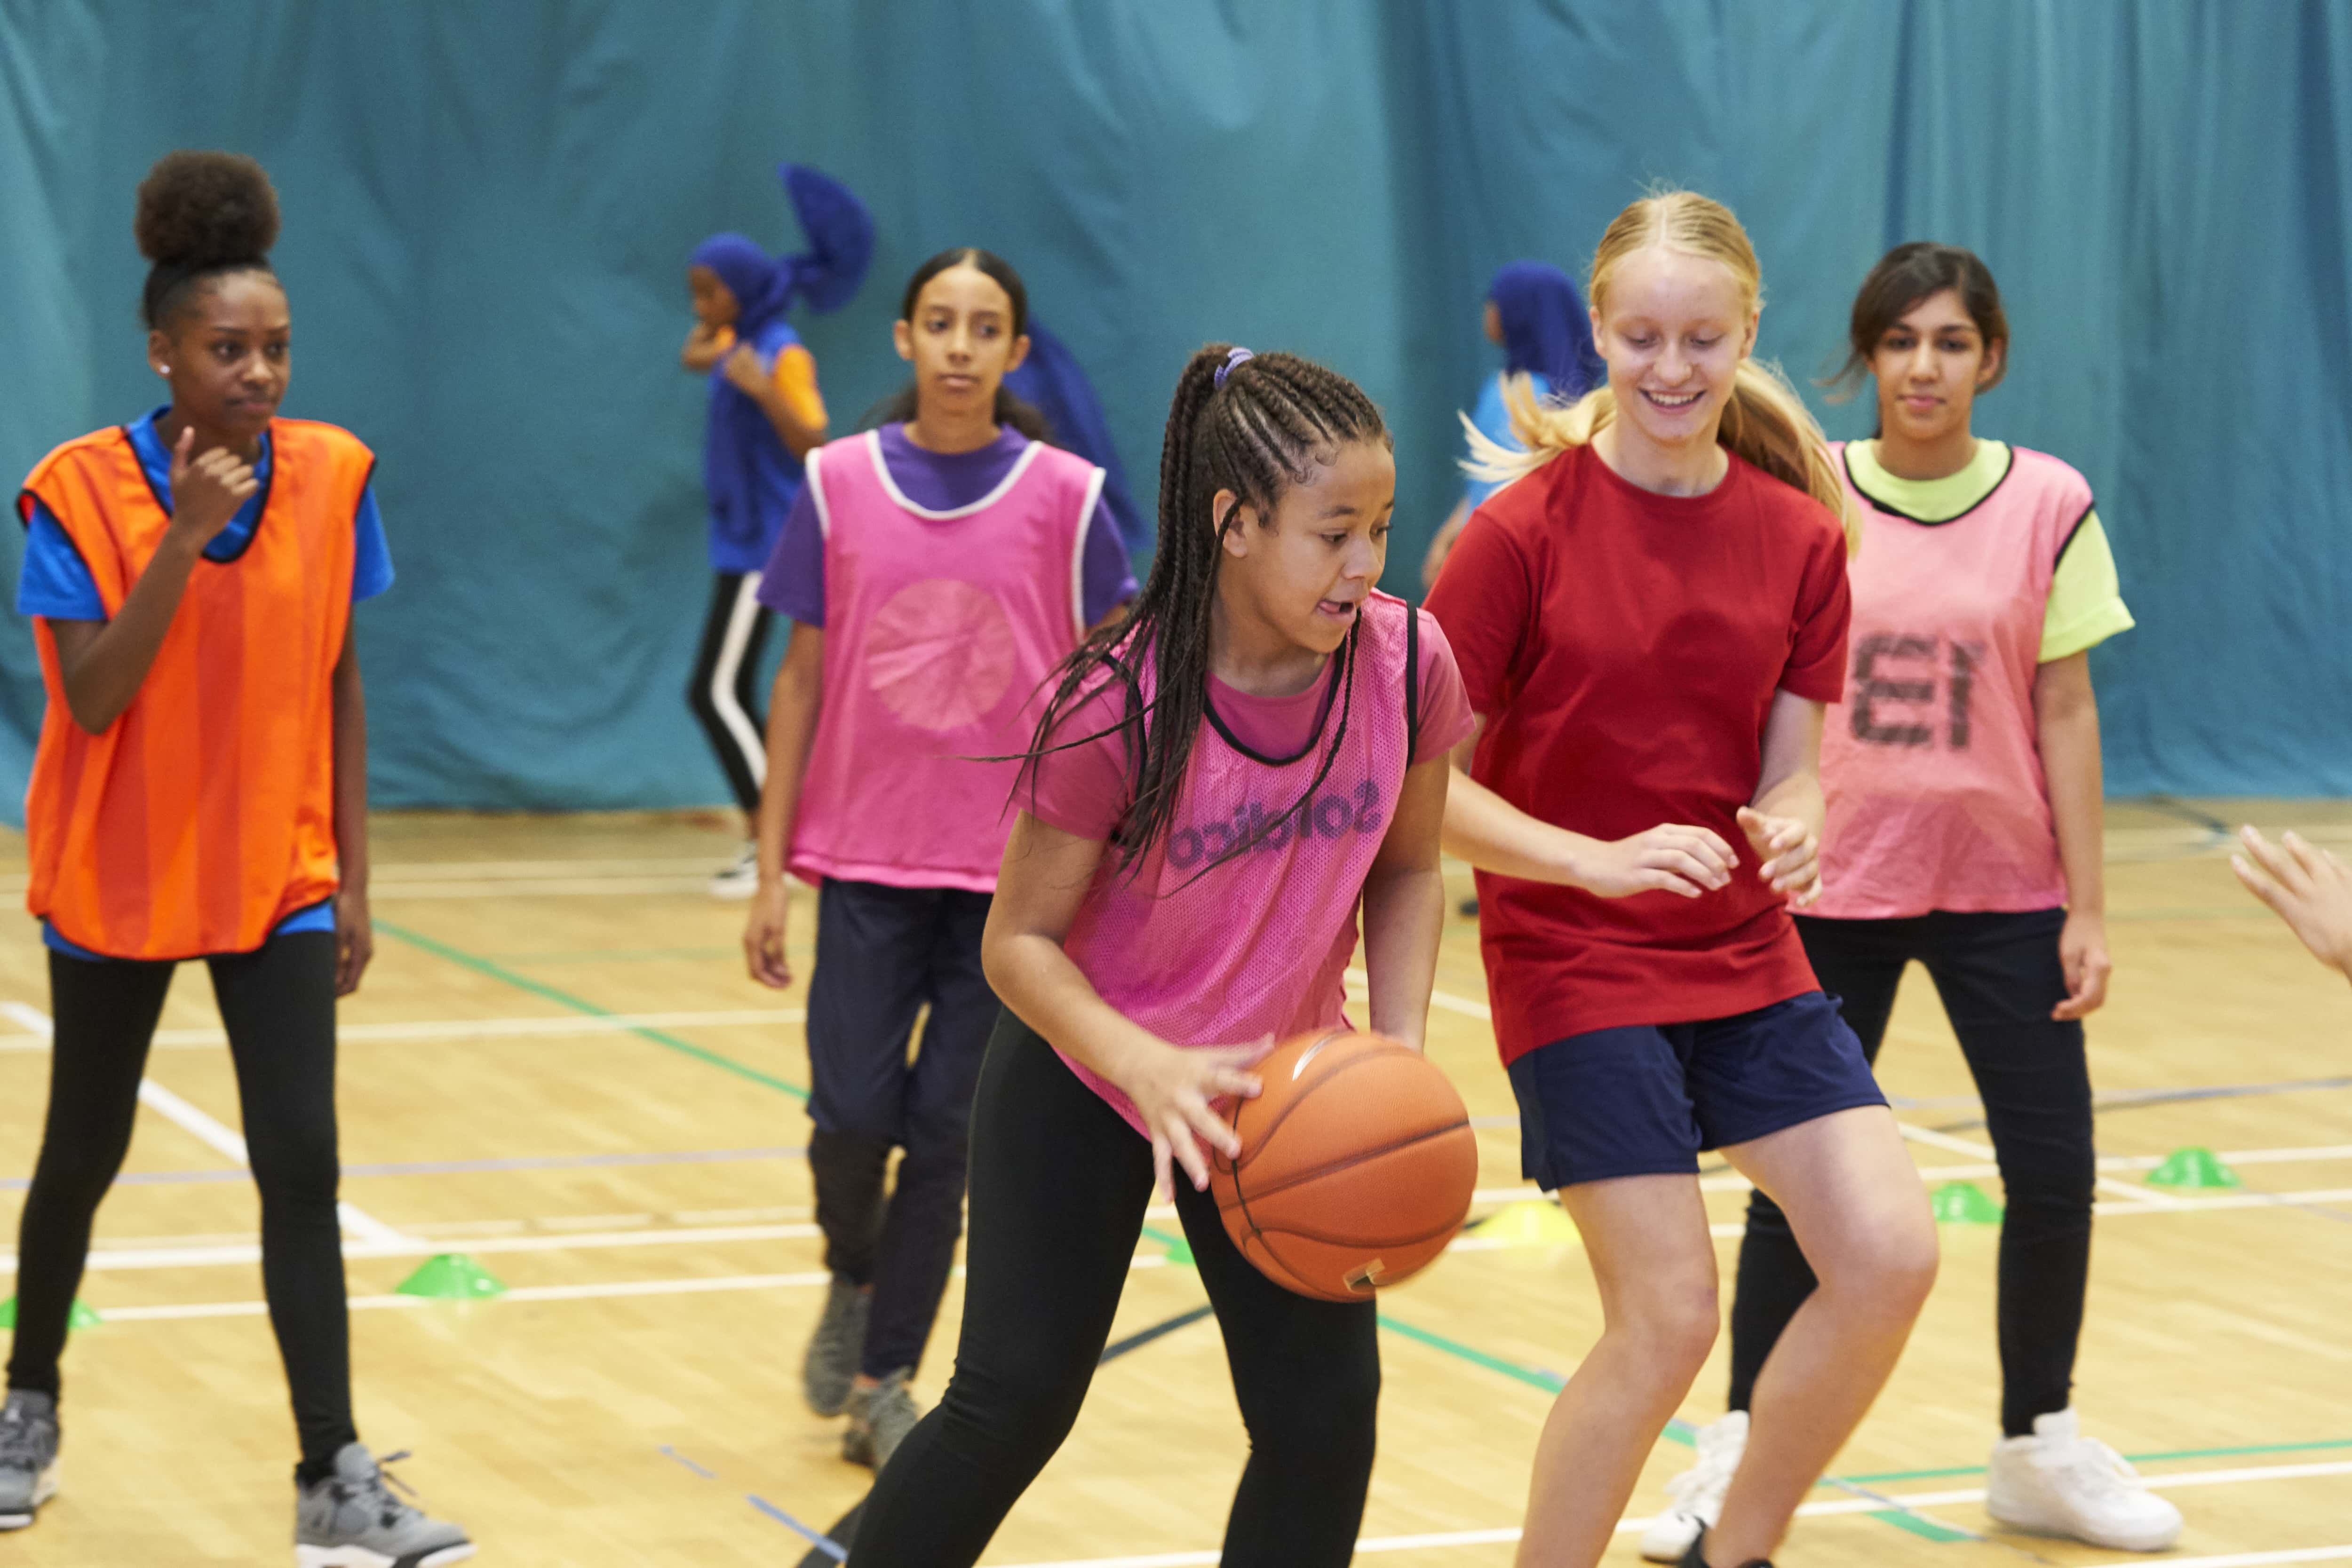 teenage girls playing basketball in a school hall